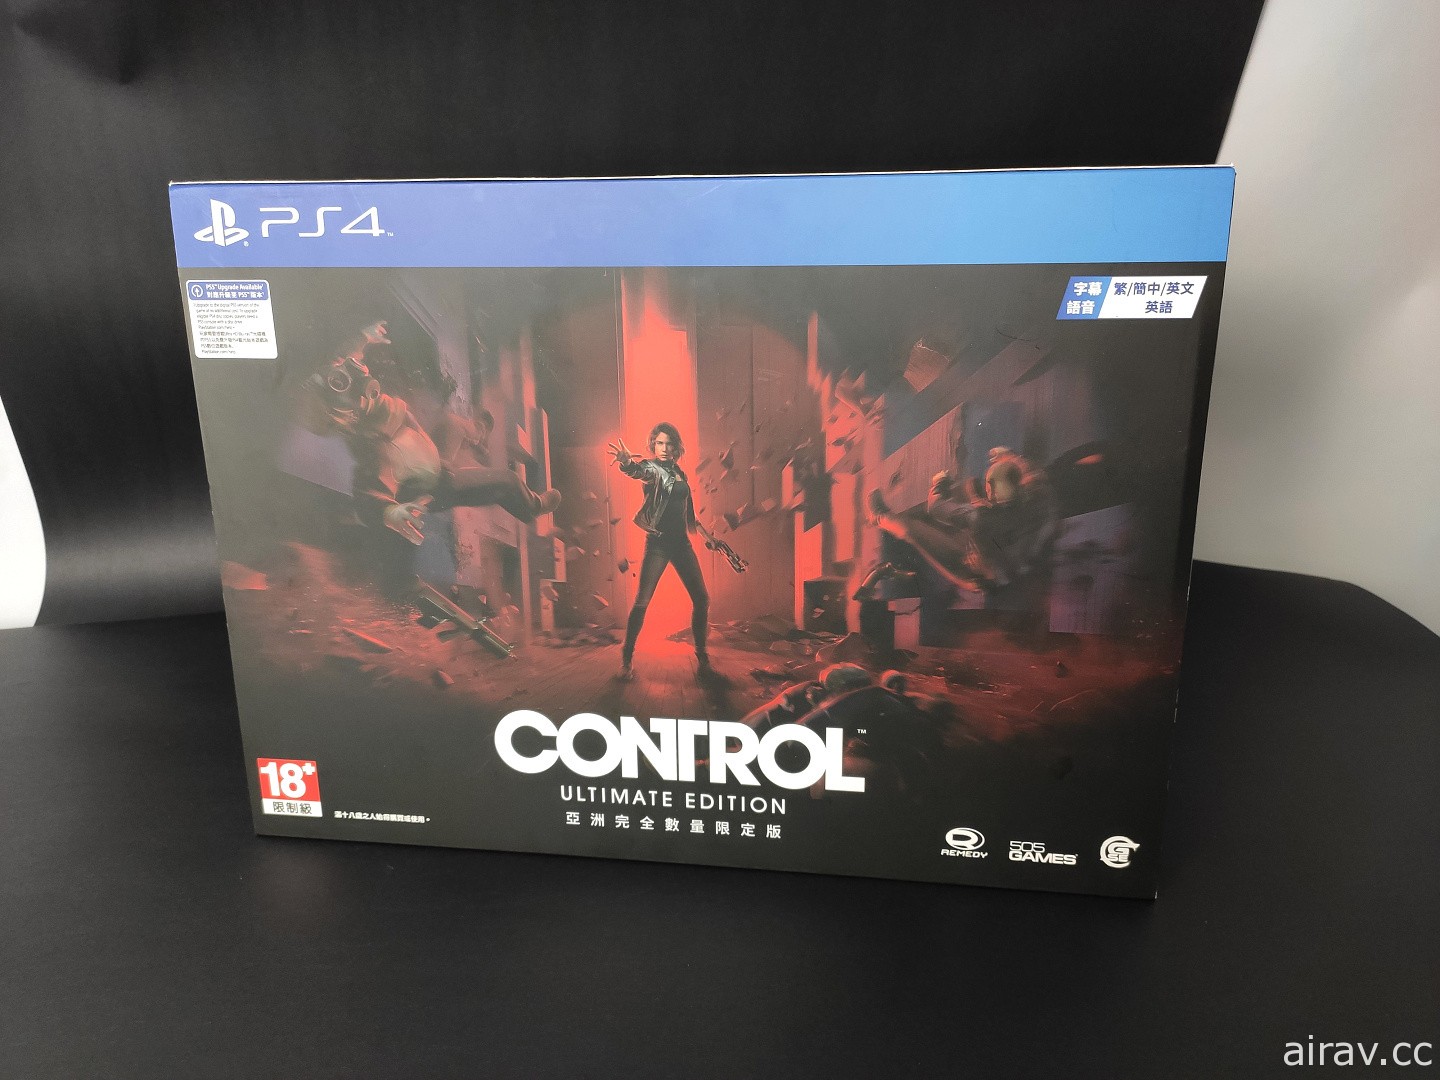 PS4《控制 CONTROL 终极版》盒装版正式上市 亚洲完全数量限定版延期发售